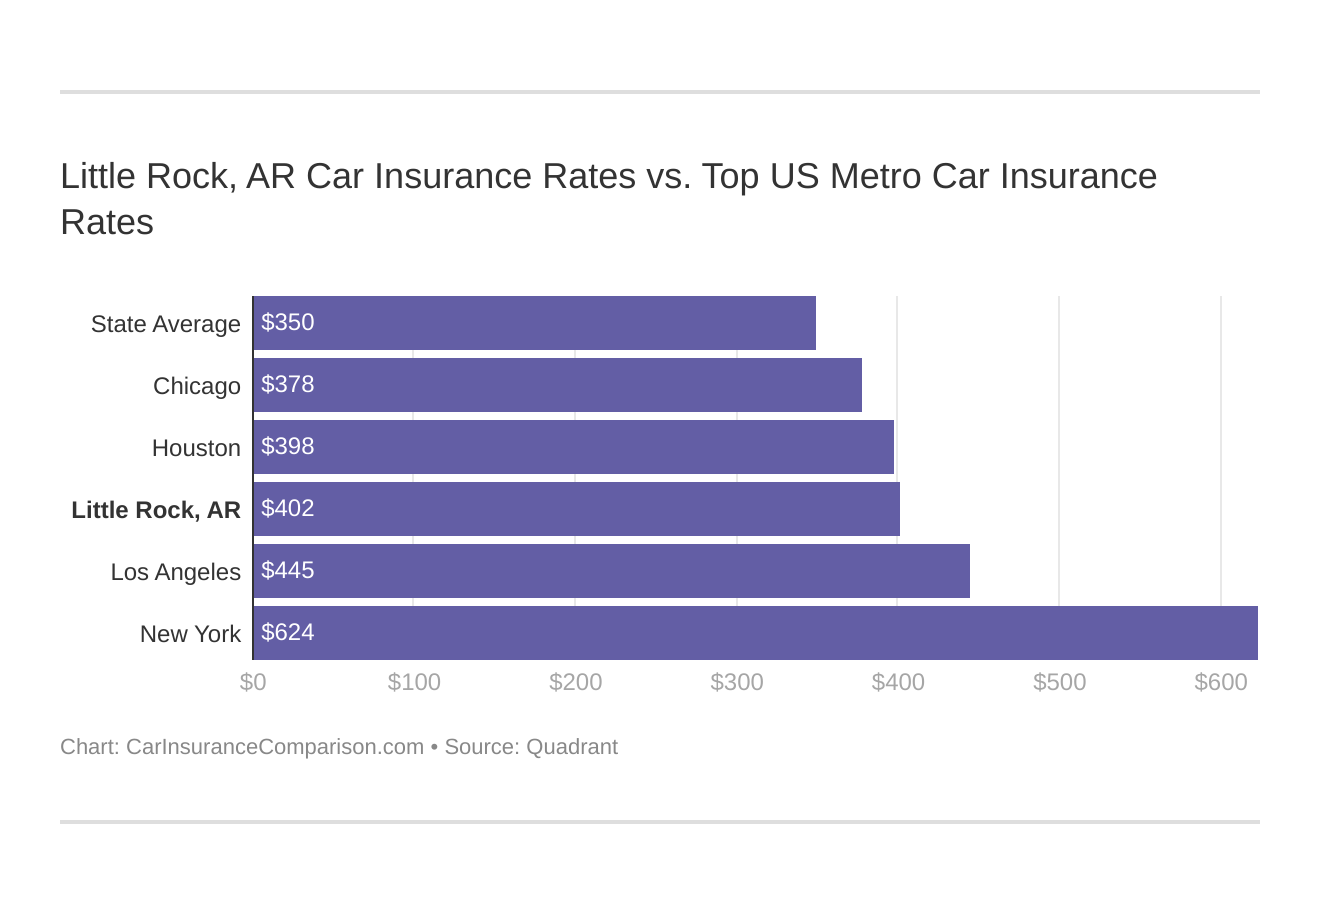 Little Rock, AR Car Insurance Rates vs. Top US Metro Car Insurance Rates